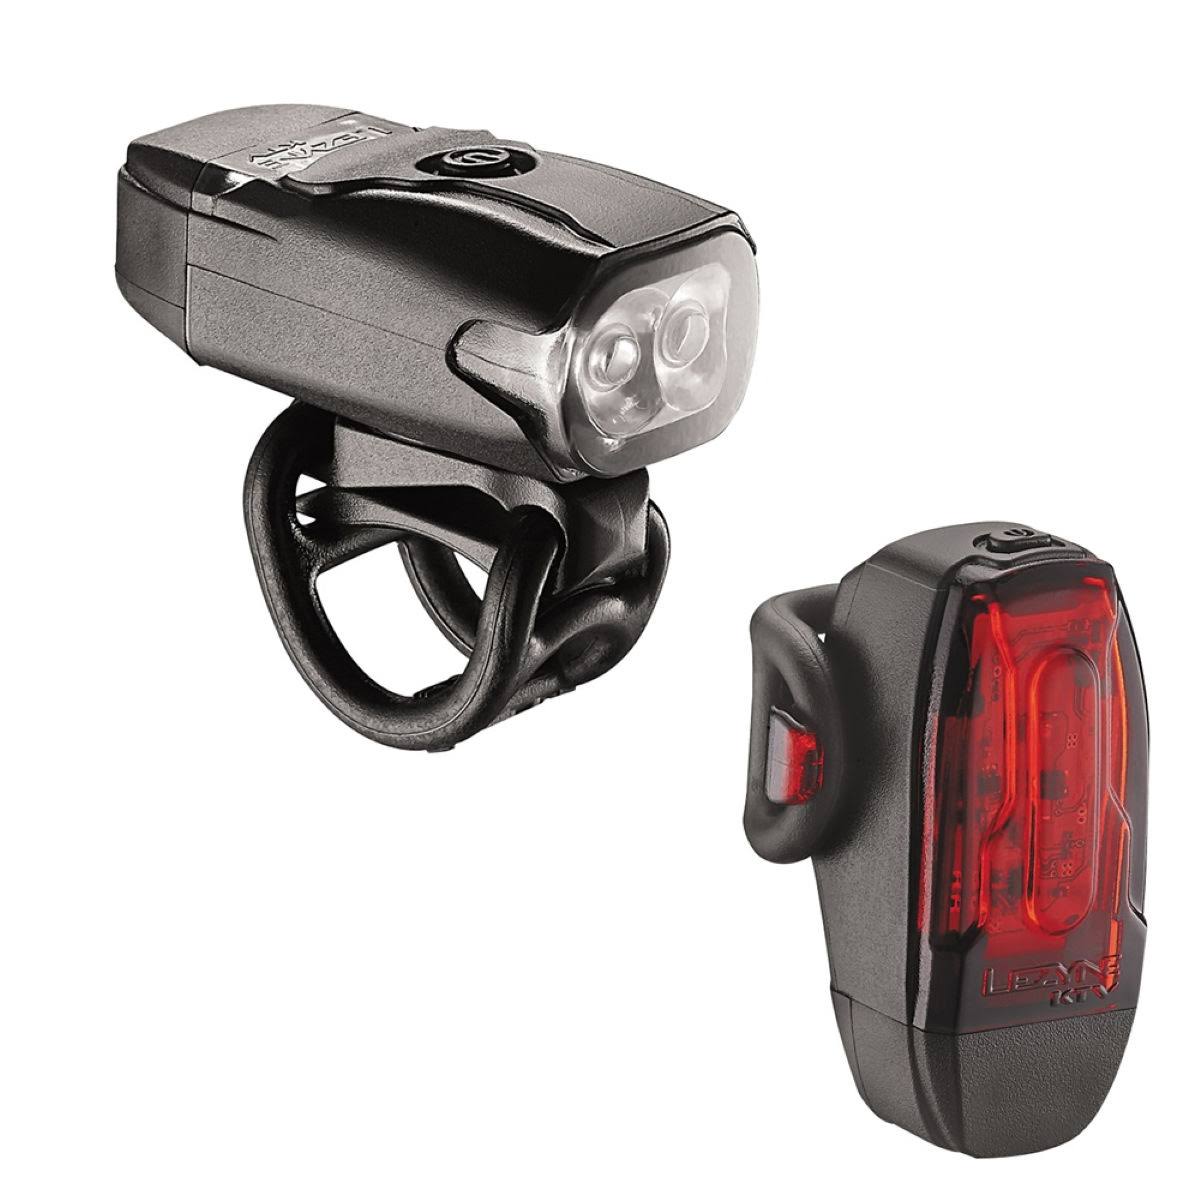 Lezyne B01GSLWQOM LED KTV Drive Bicycle Headlight/Tail Light Pair - Black